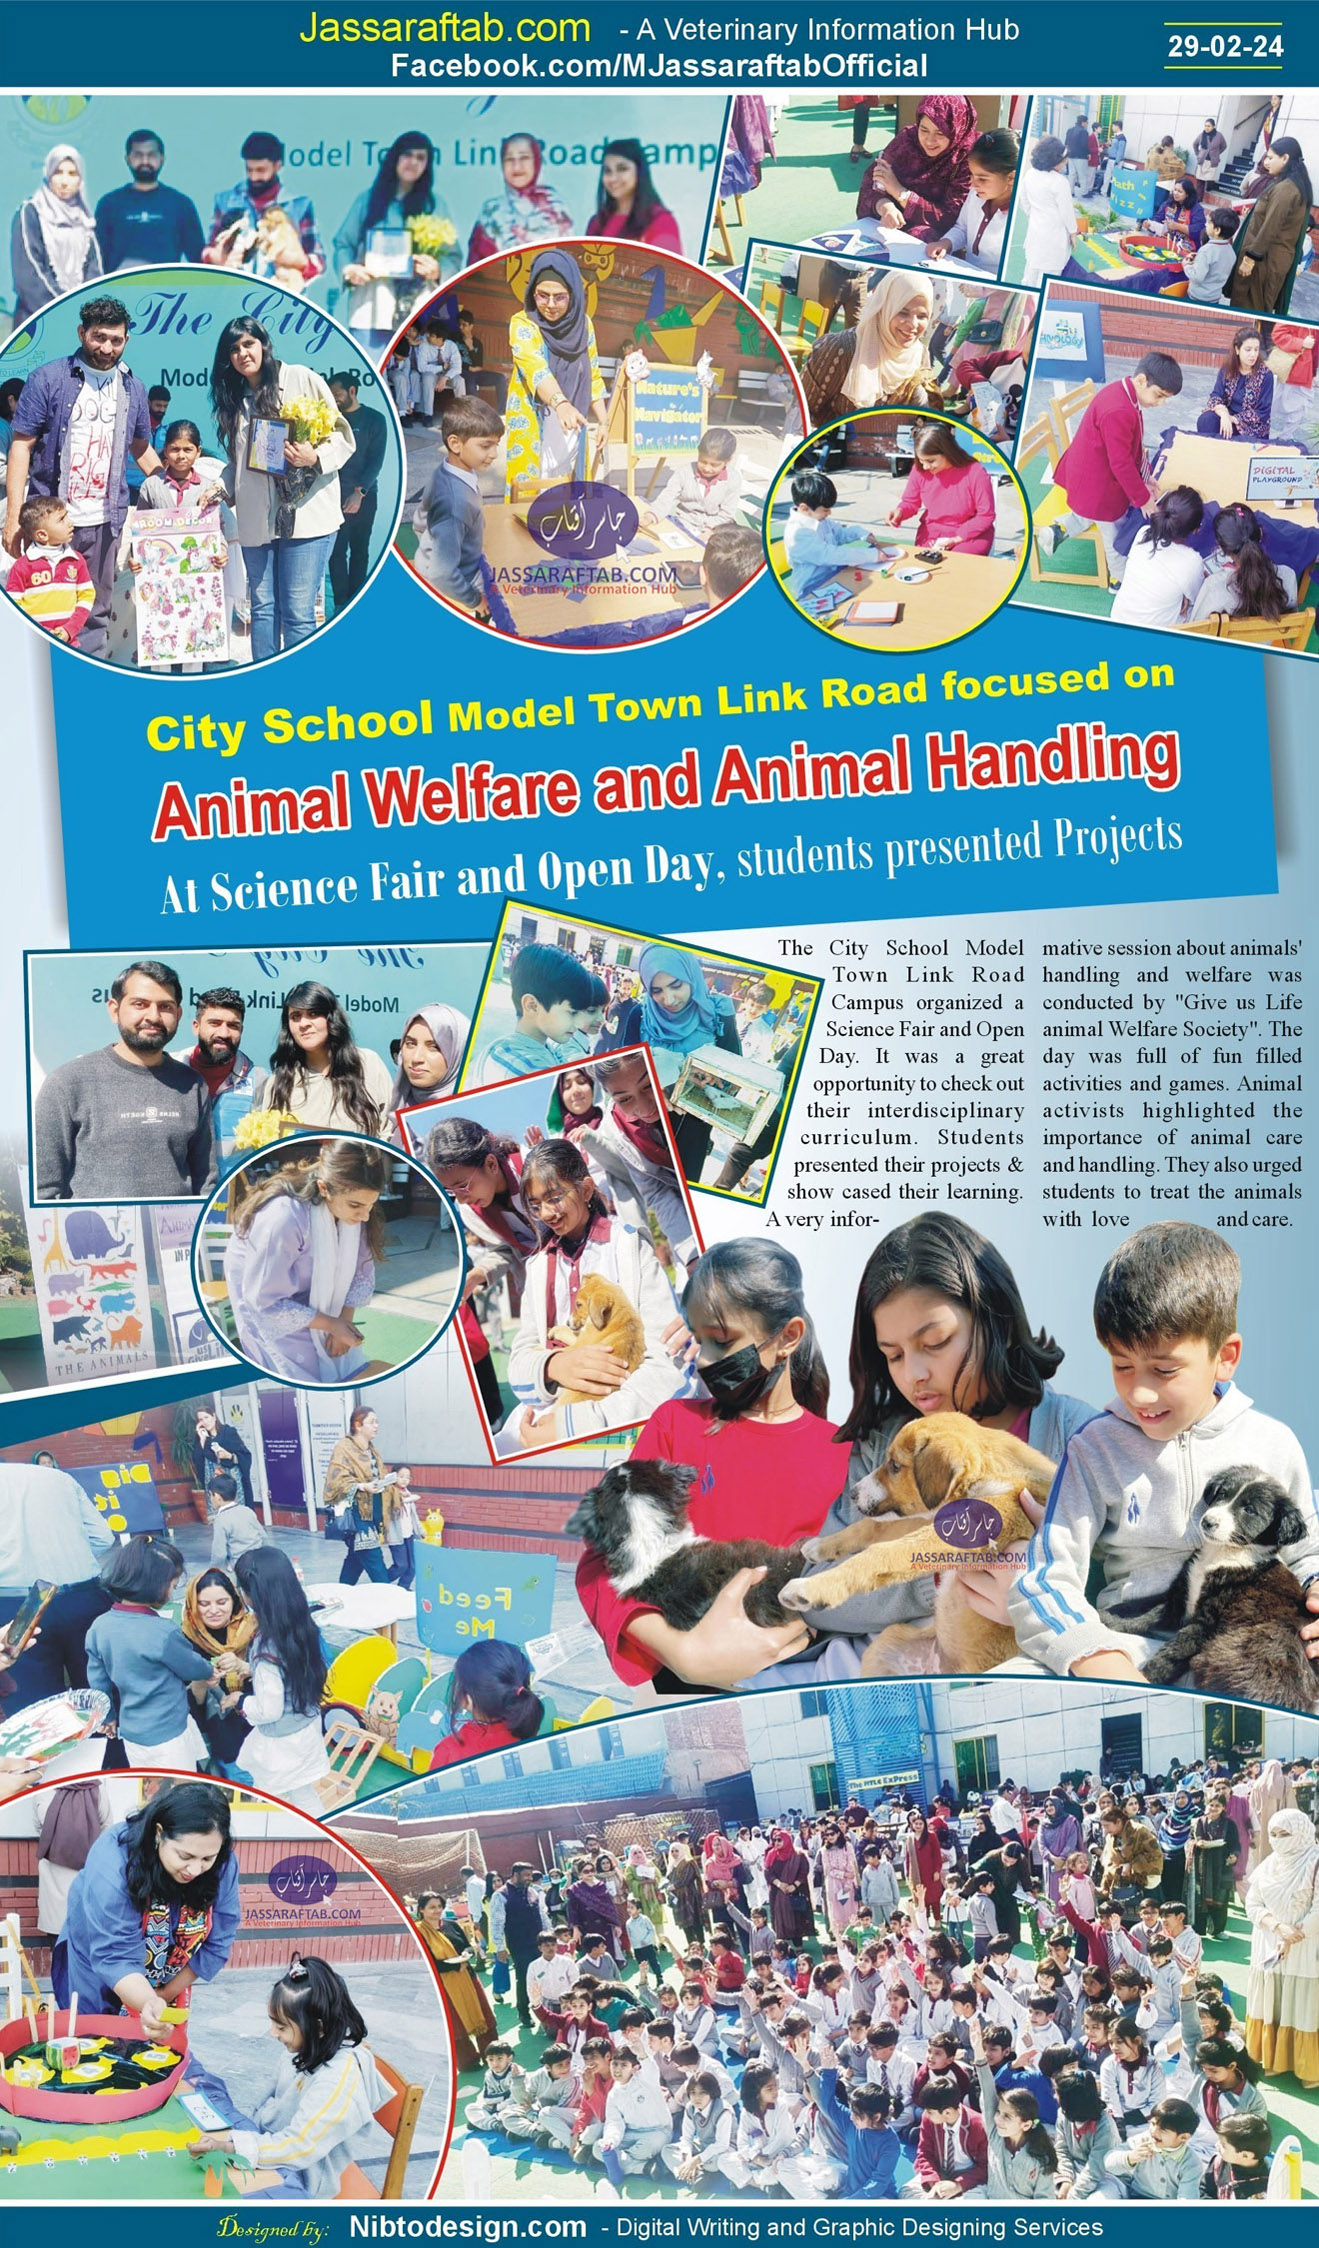 City School Animal Welfare School Pet Show and Science Fair